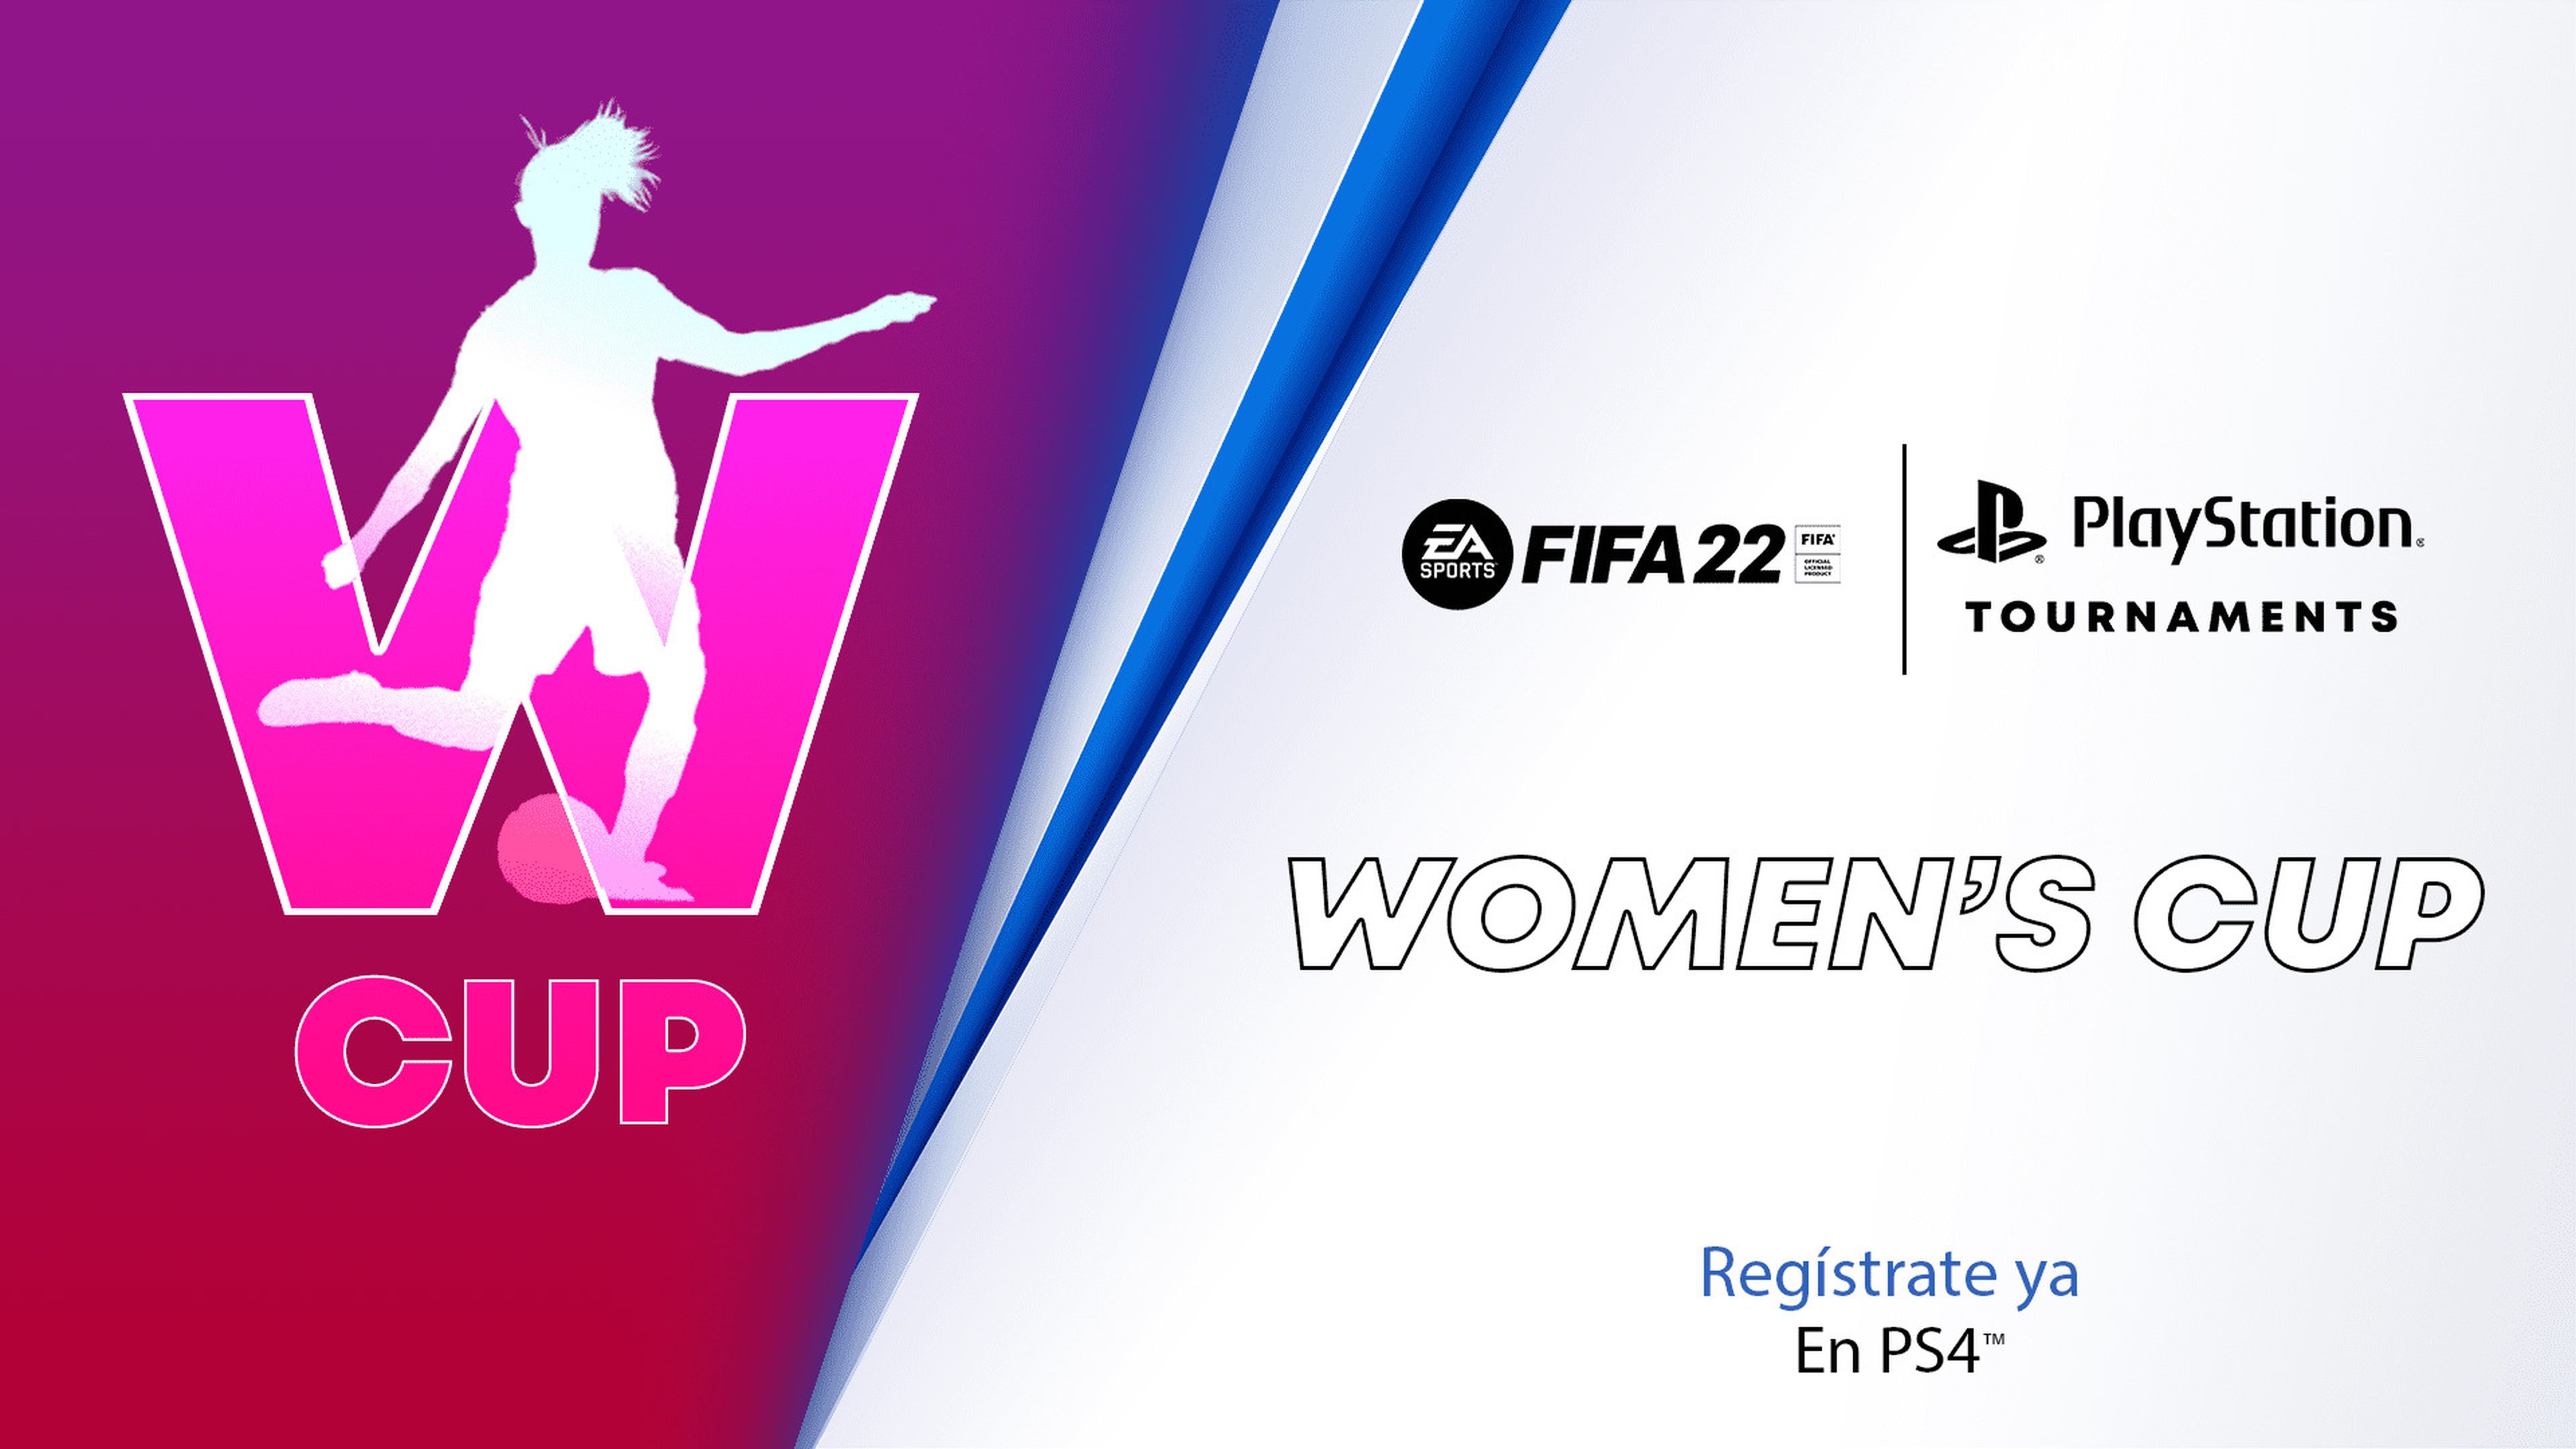 Women's Cup FIFA 22